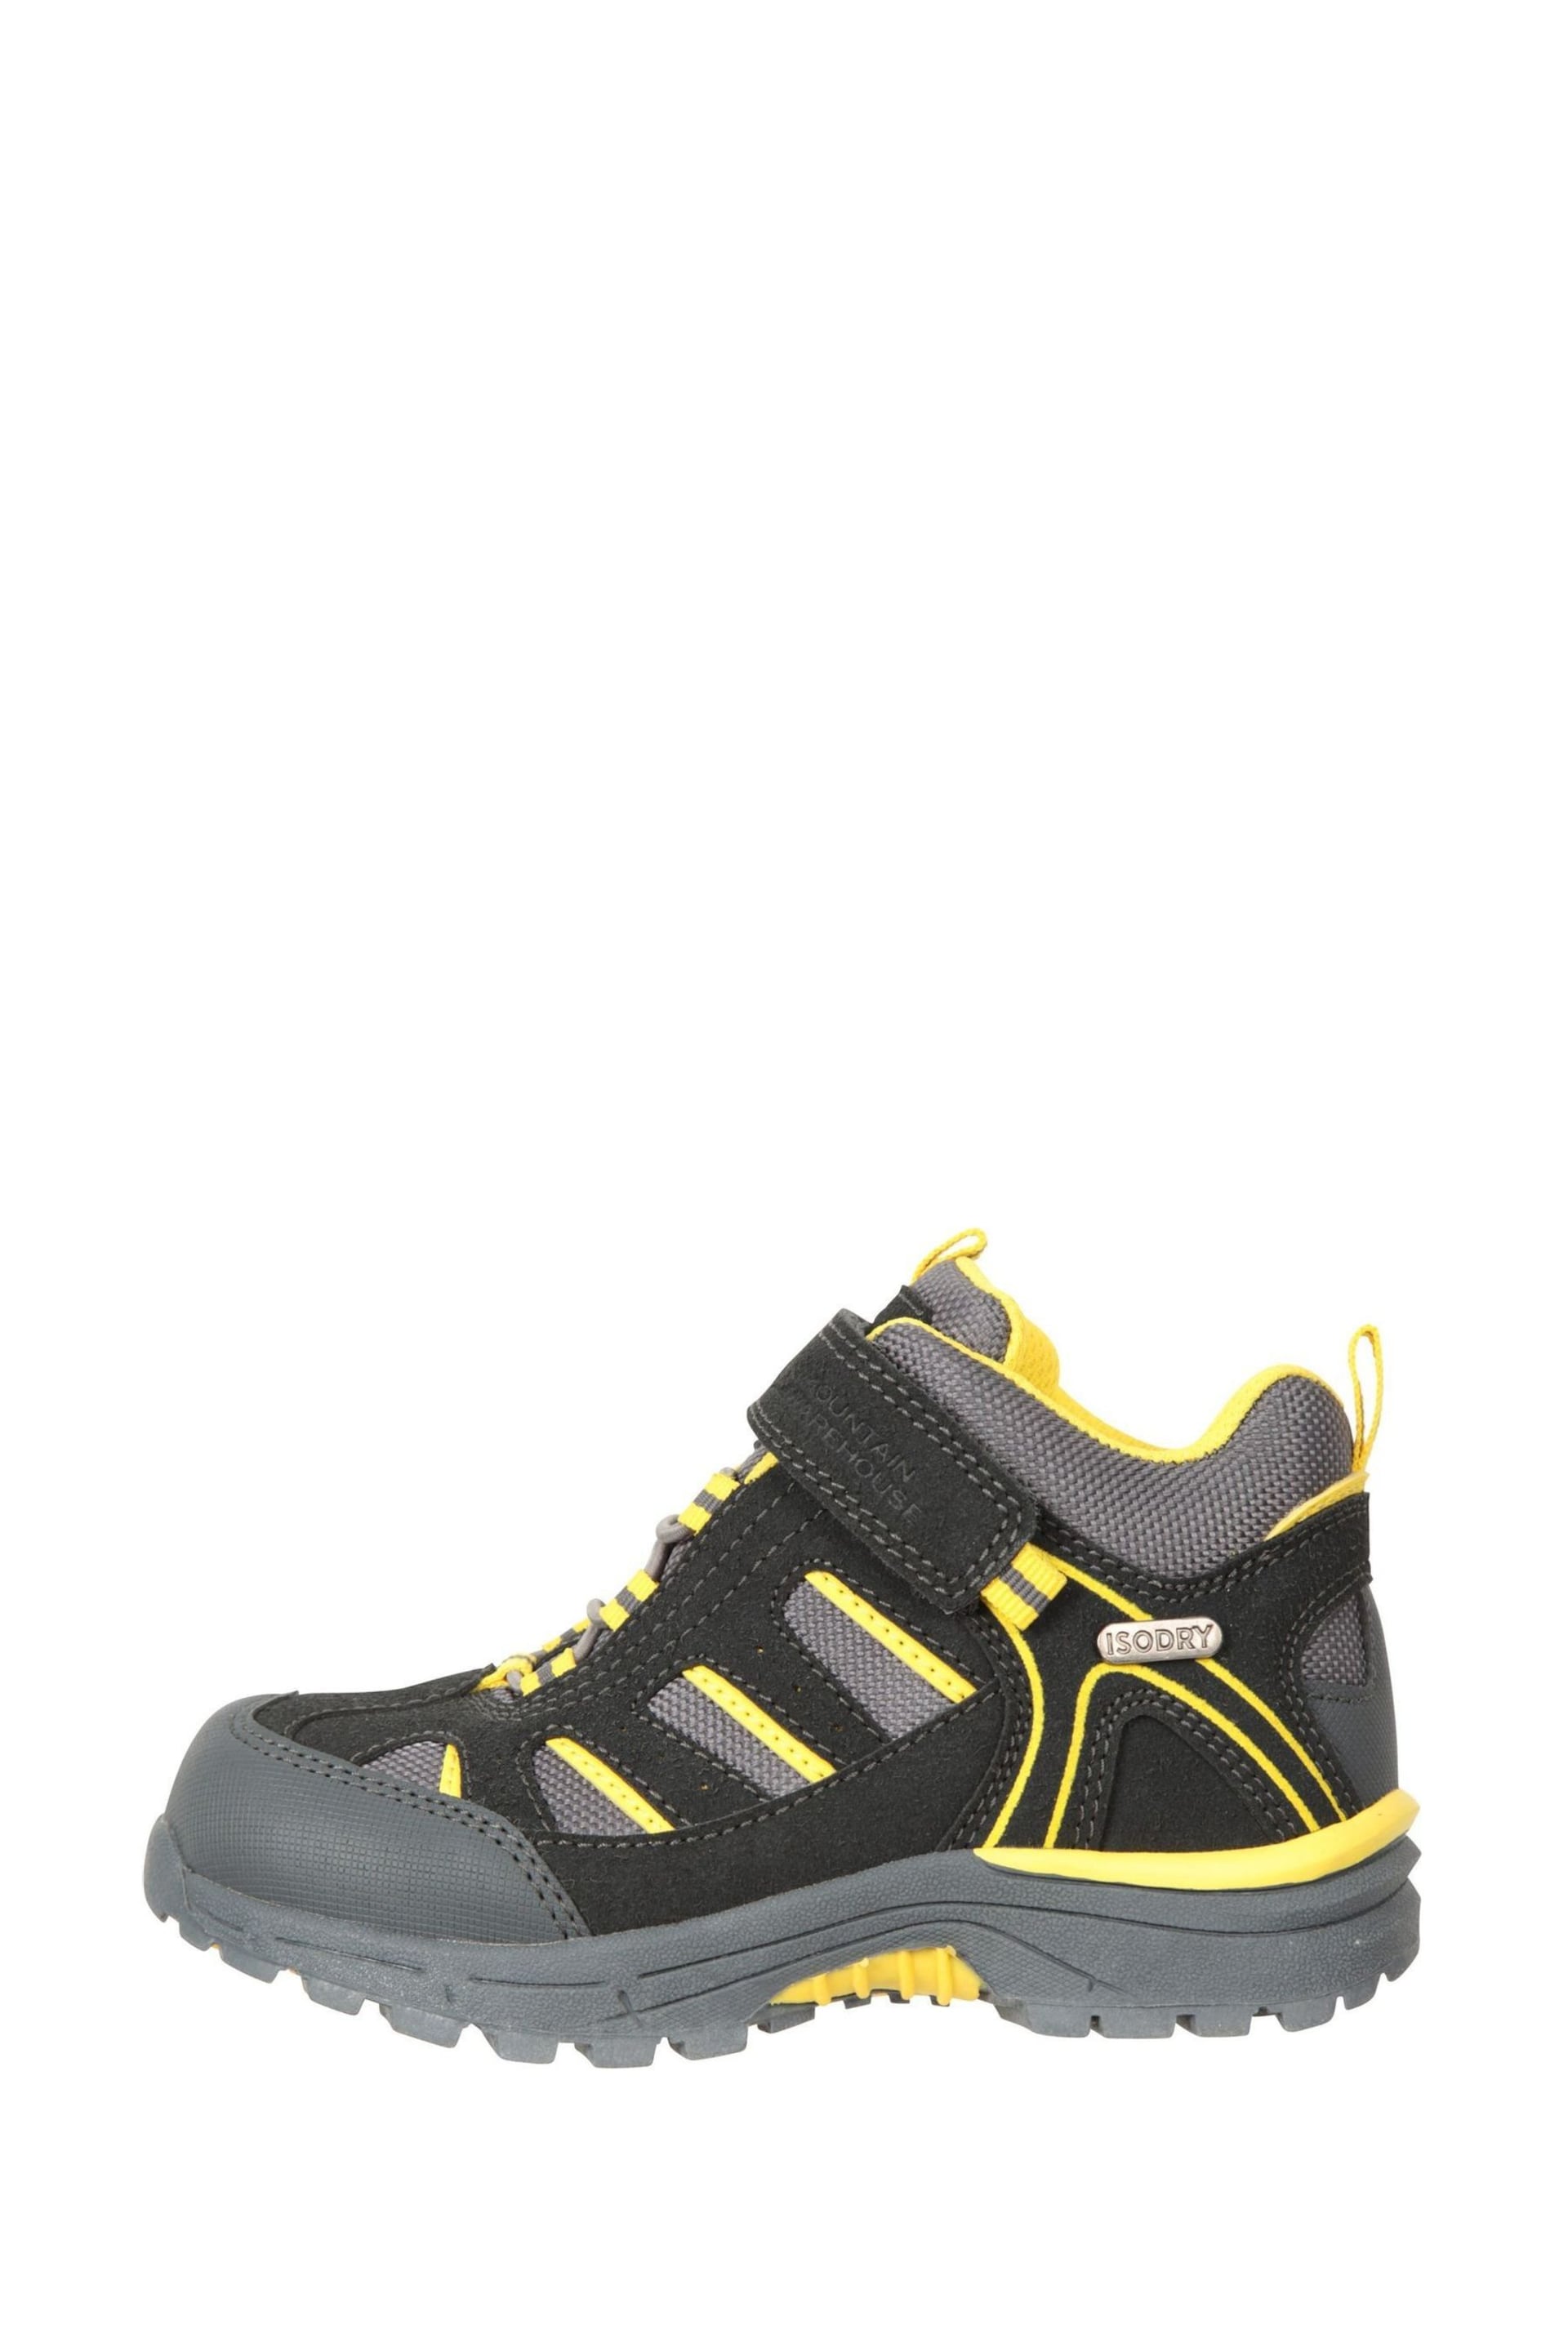 Mountain Warehouse Black Junior Drift Waterproof Walking Boots - Image 3 of 5